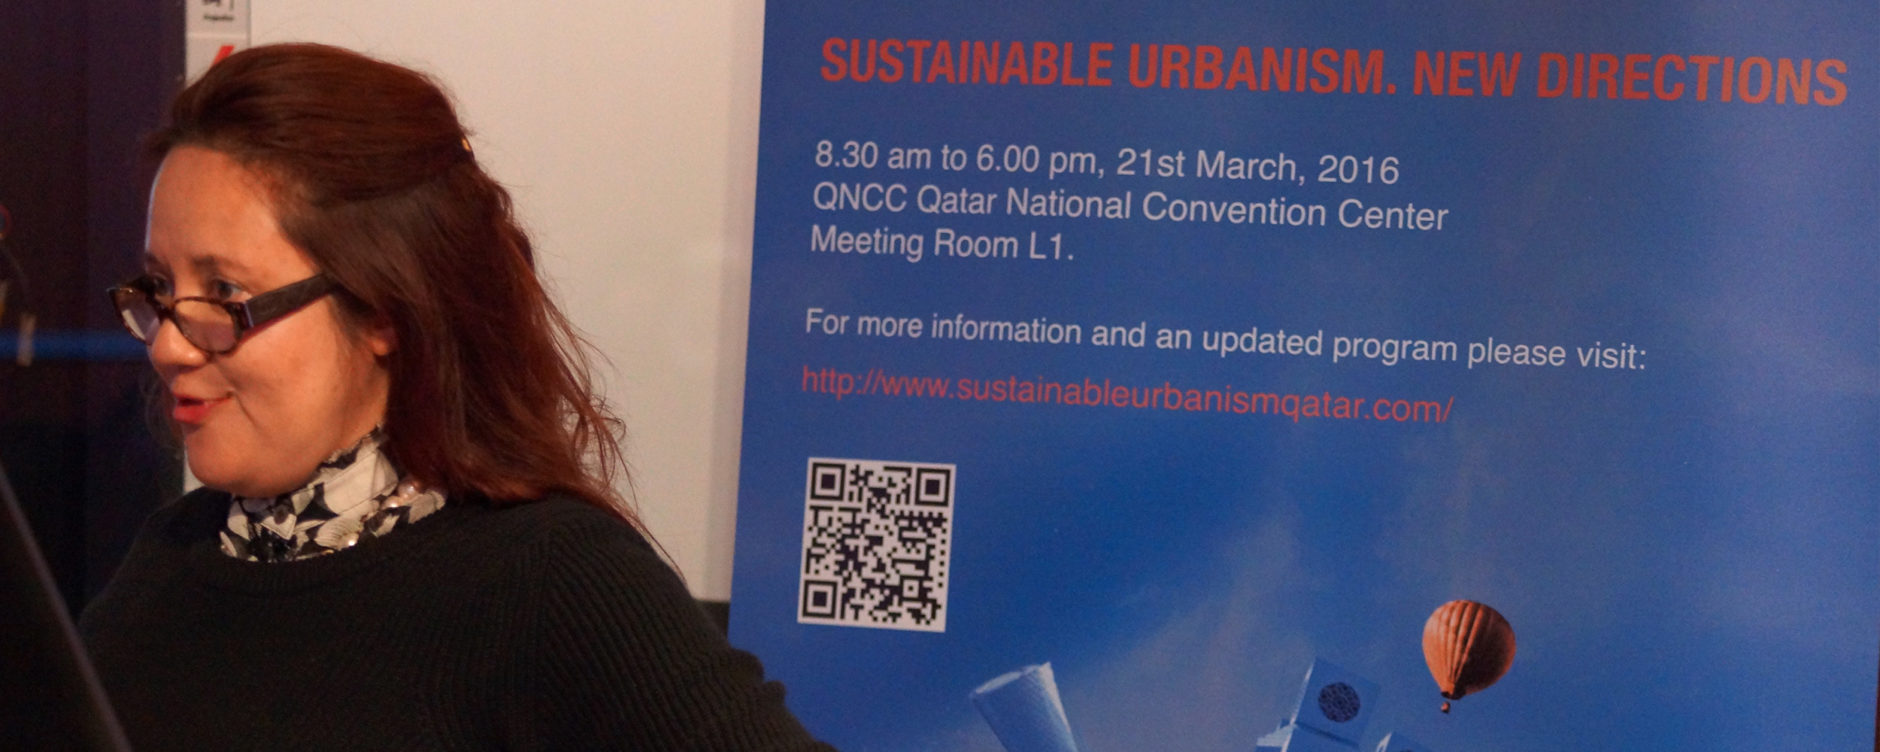 Sharifah Hamza presenting at the Sustainable Urbanism: New Directions Workshop, 21 March 2016, Qatar University, © Qatar University.